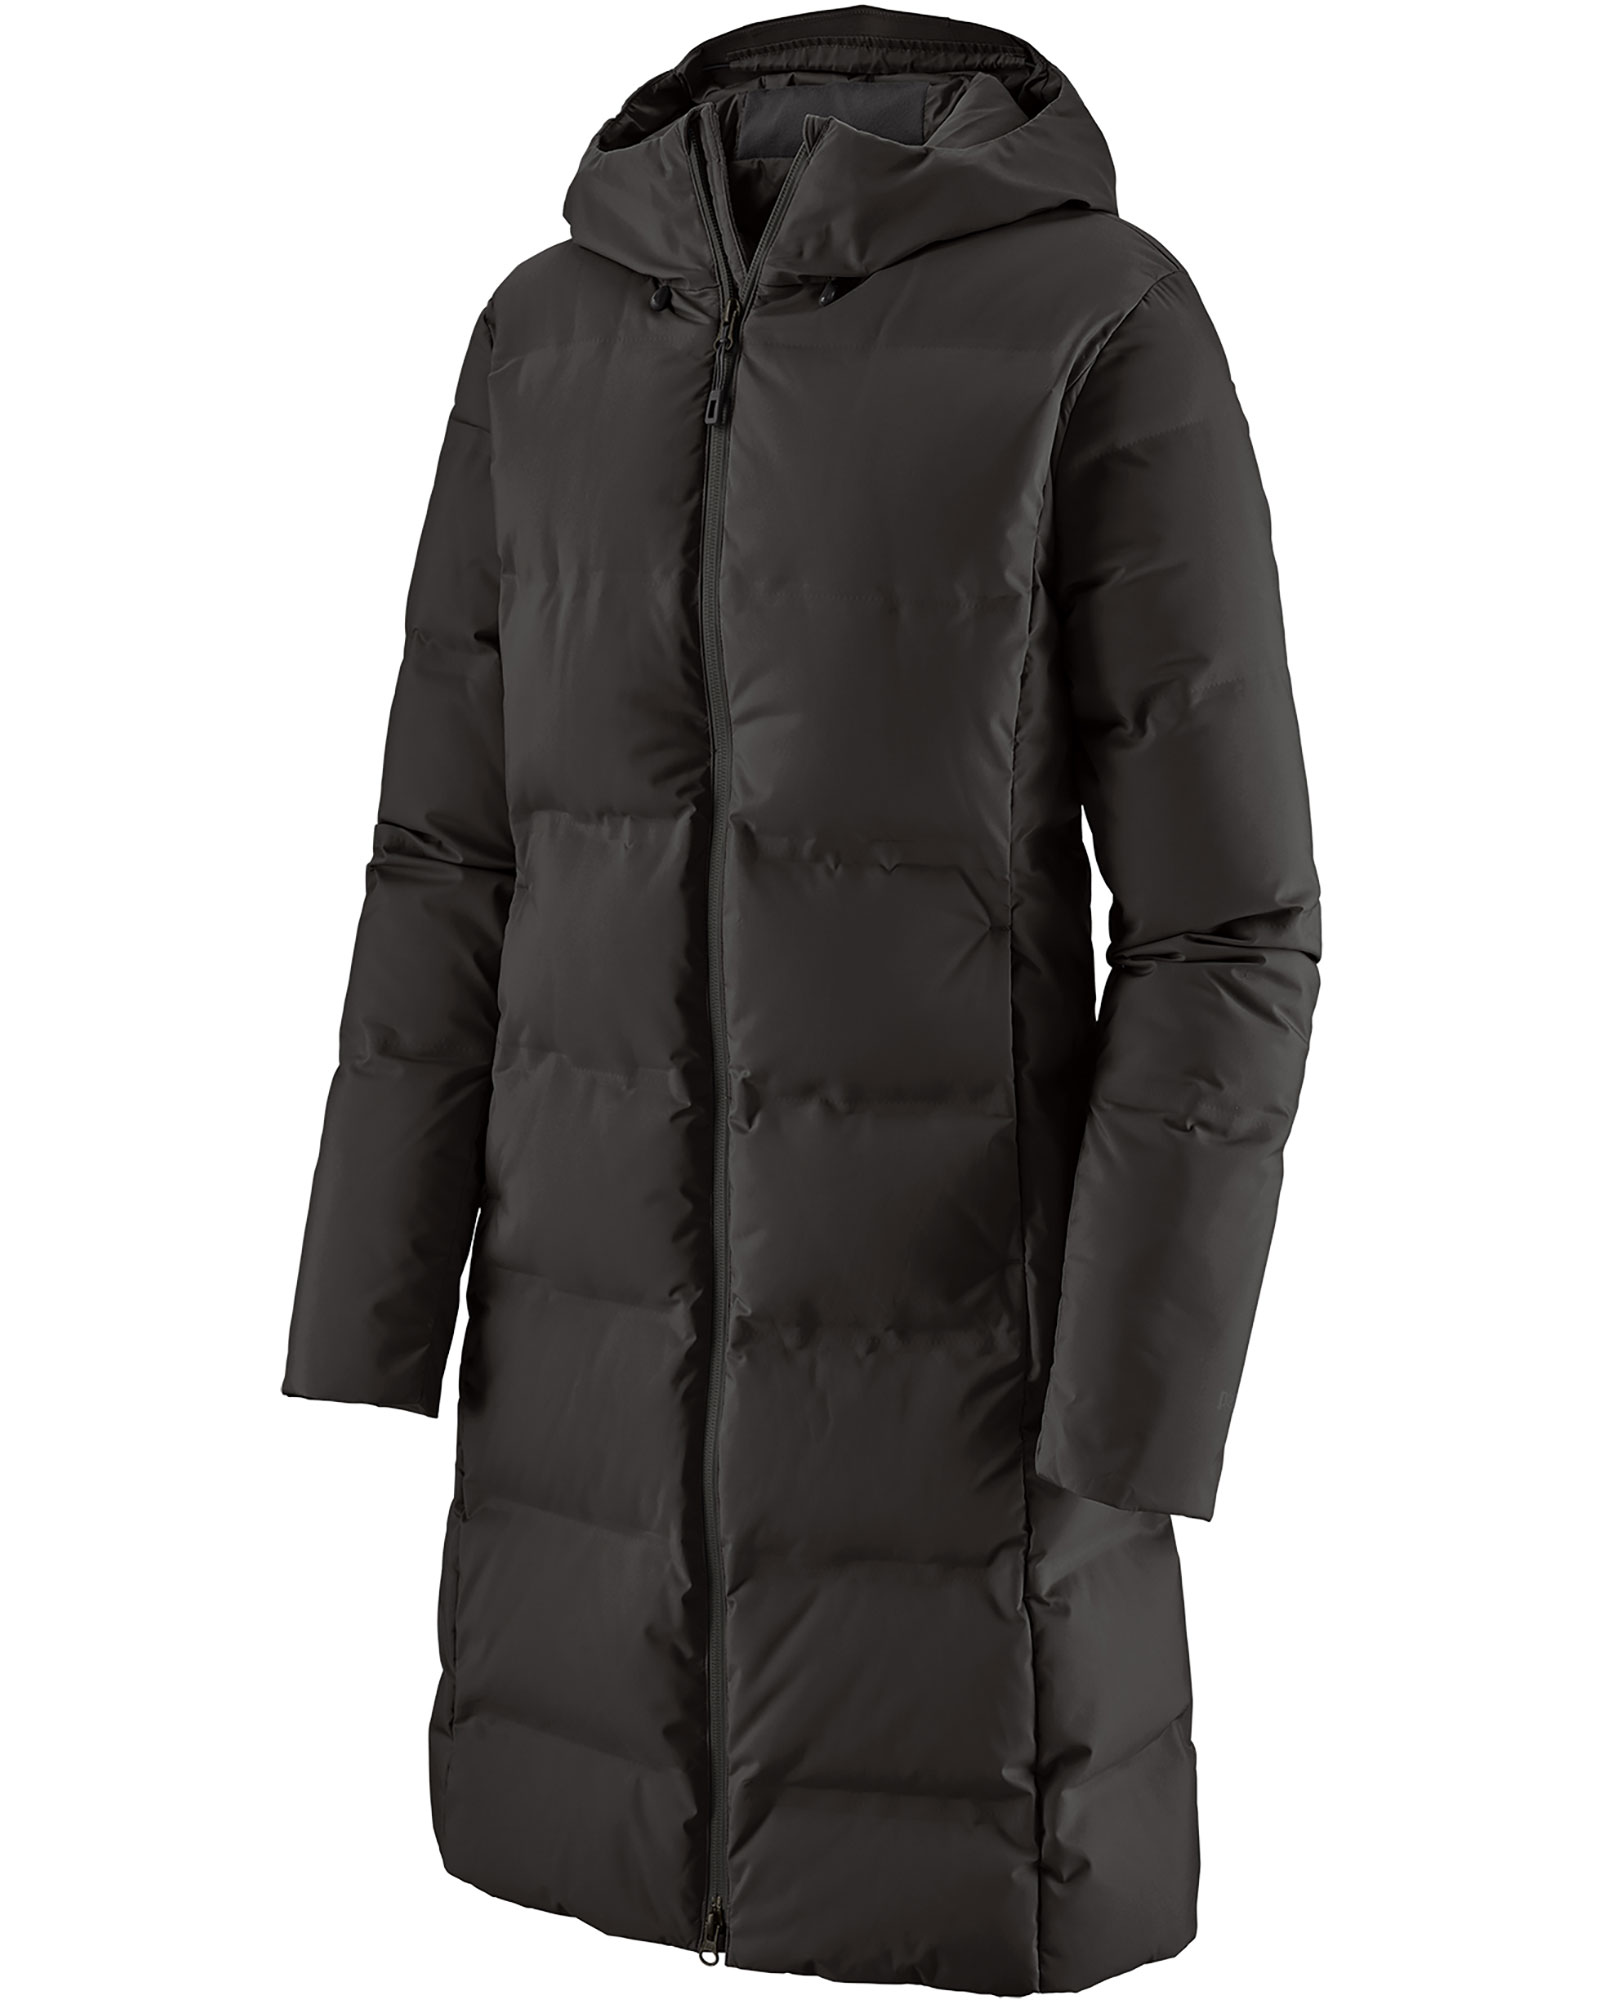 Patagonia Jackson Glacier Women’s Parka Jacket - black XL